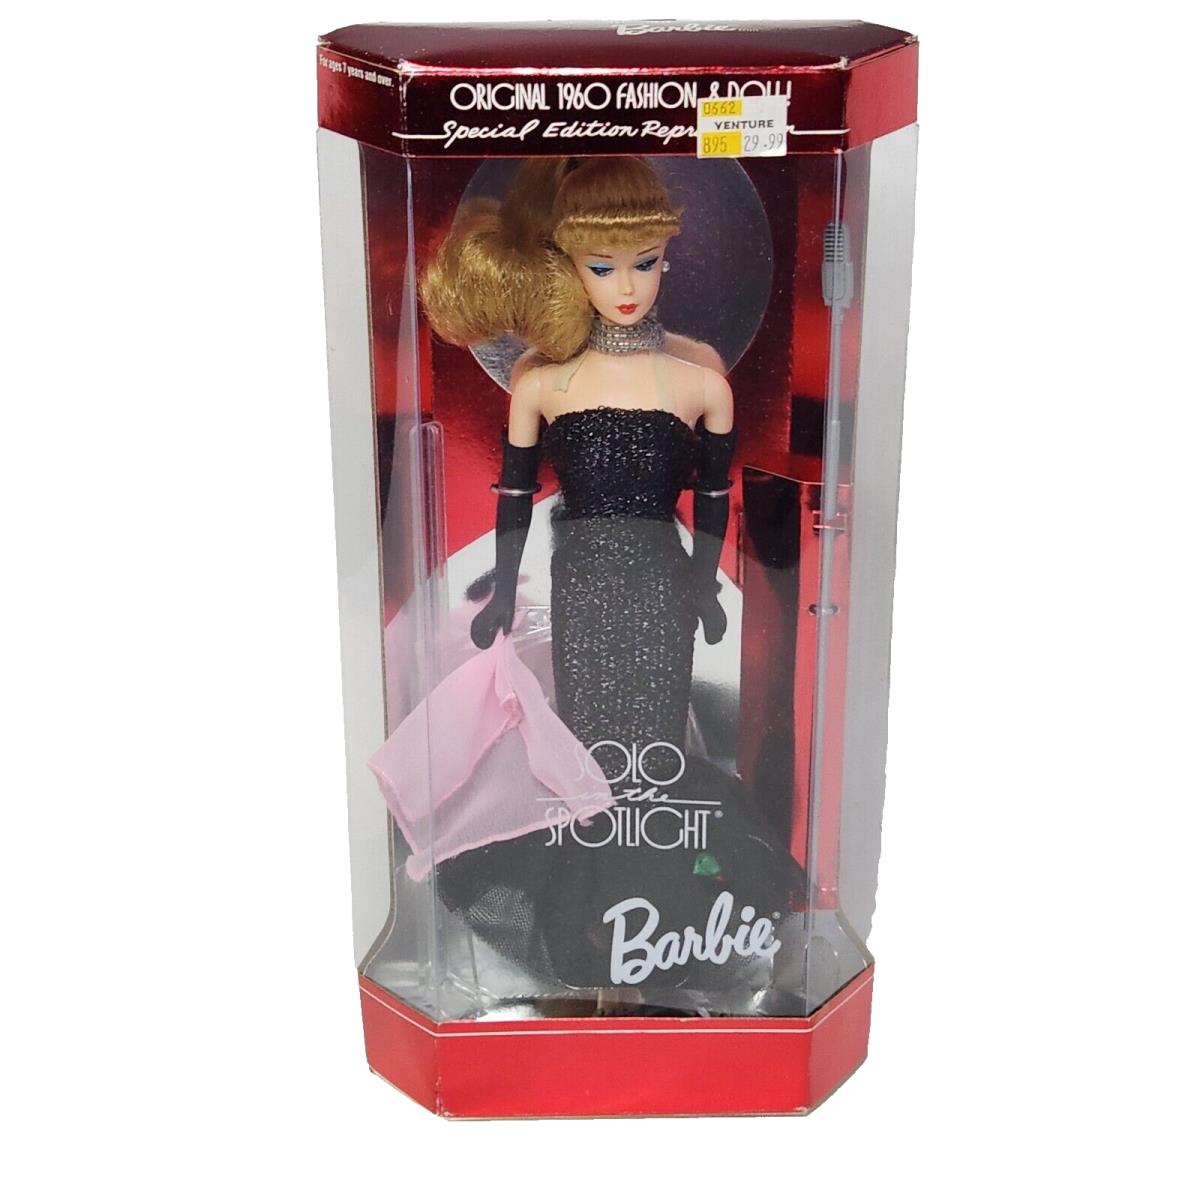 Vintage 1994 Solo IN The Spotlight Barbie Doll Mattel Repro 13534